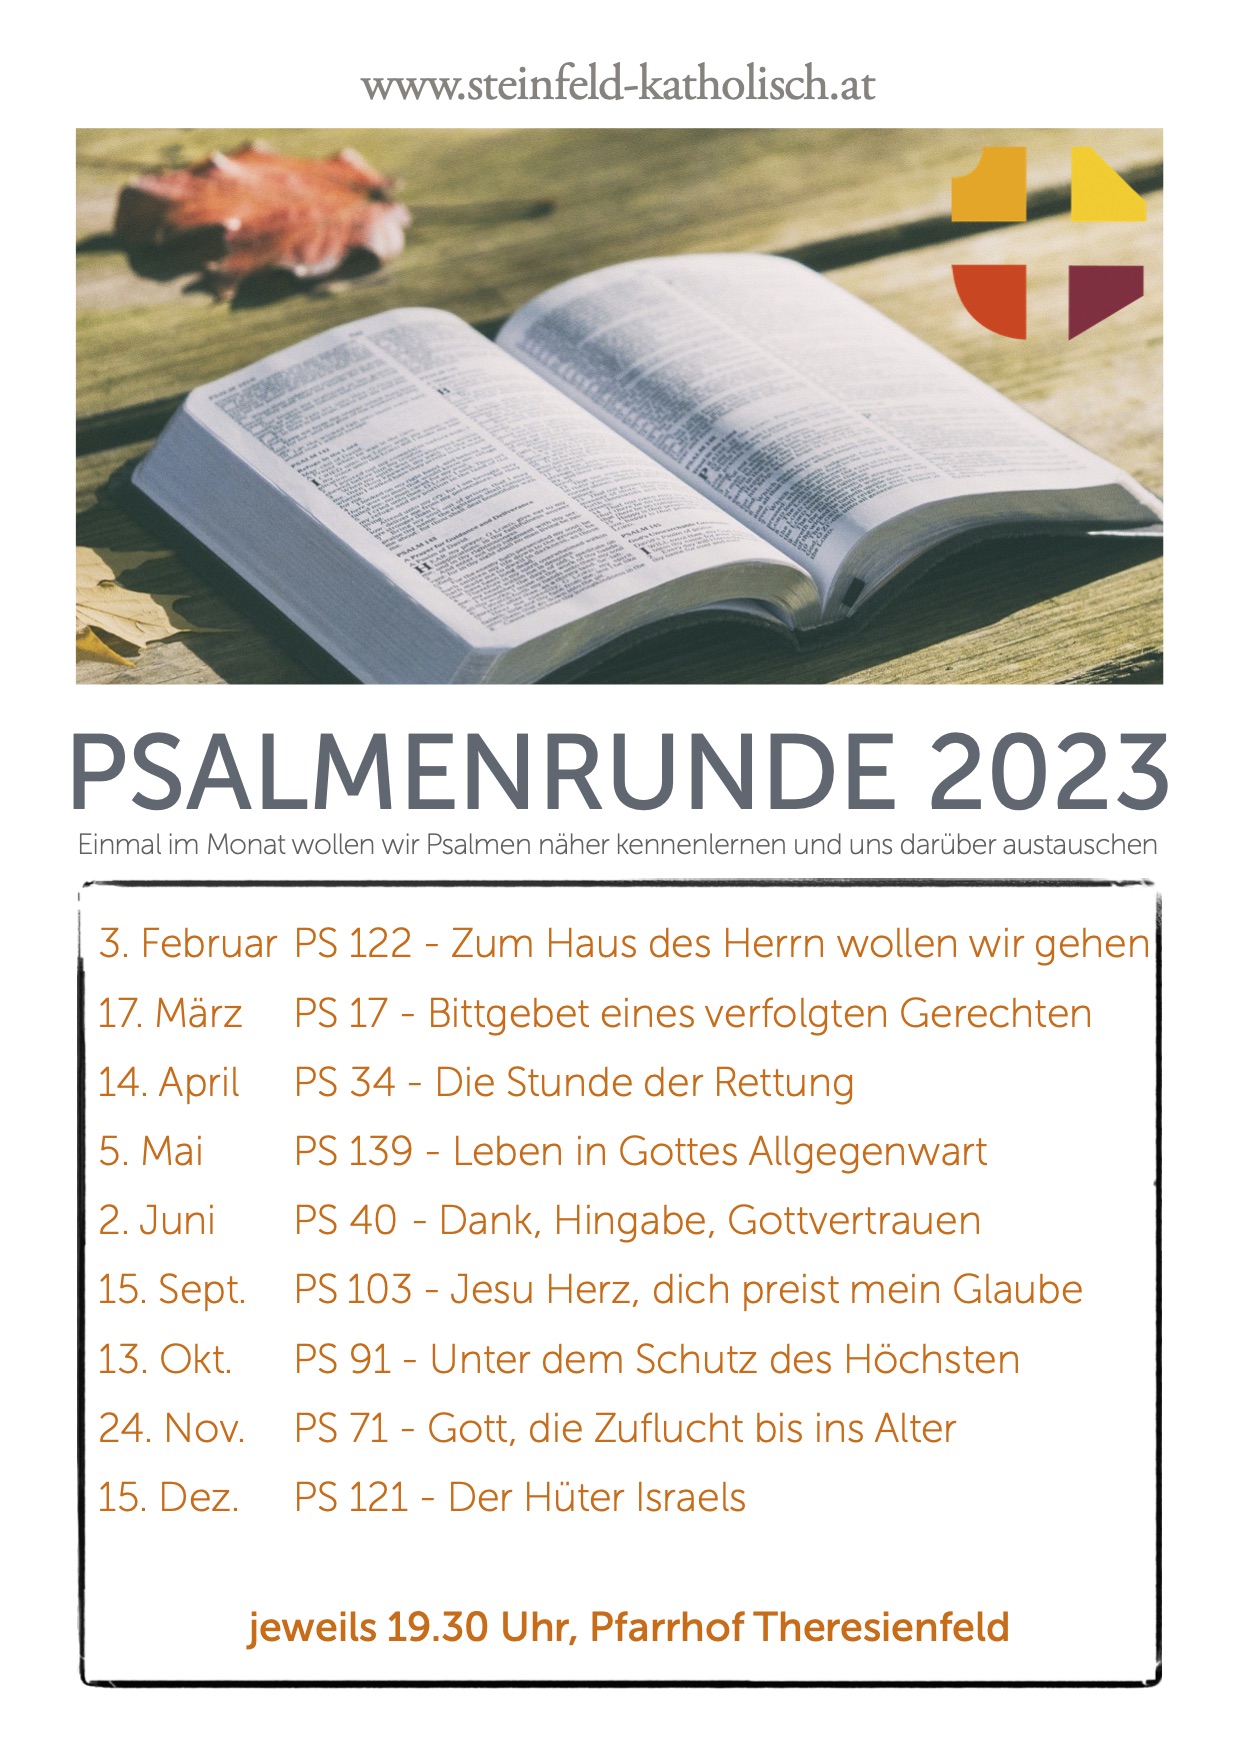 Psalmenrunde Termine 2023